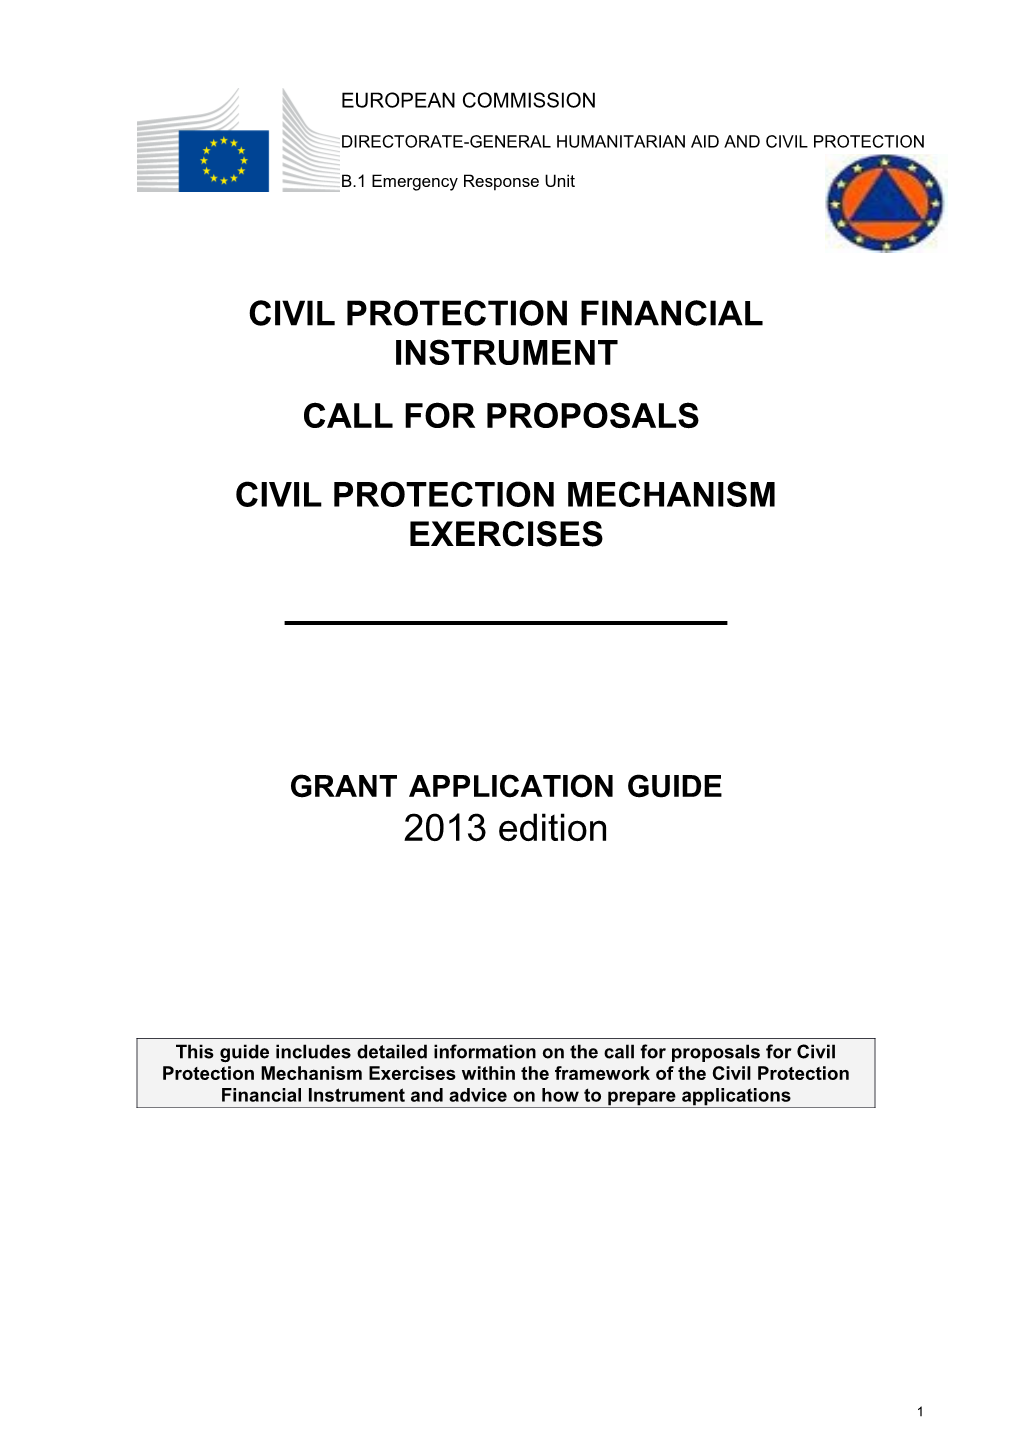 Civil Protection Mechanism Exercises